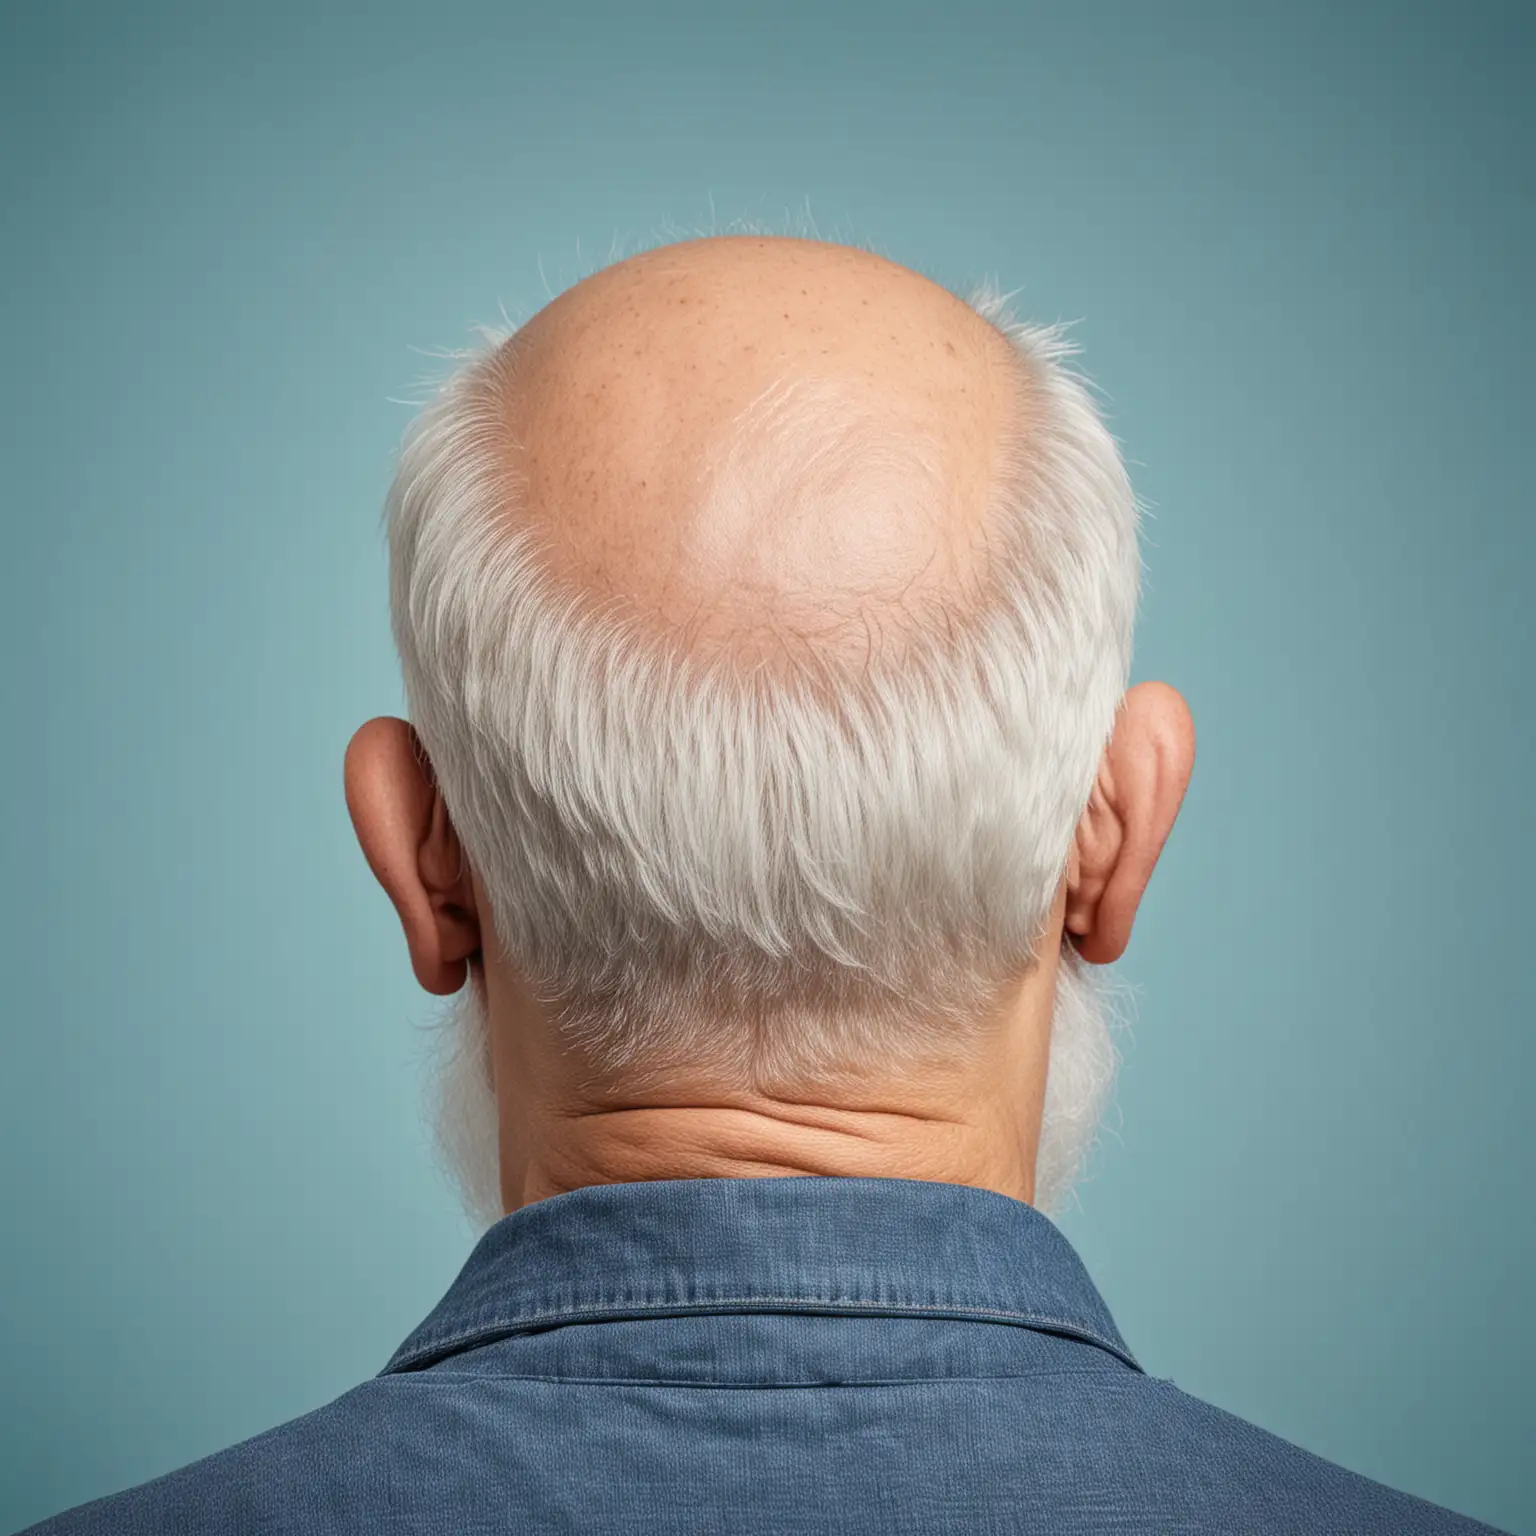 Elderly-European-Man-with-Long-White-Beard-Back-View-Portrait